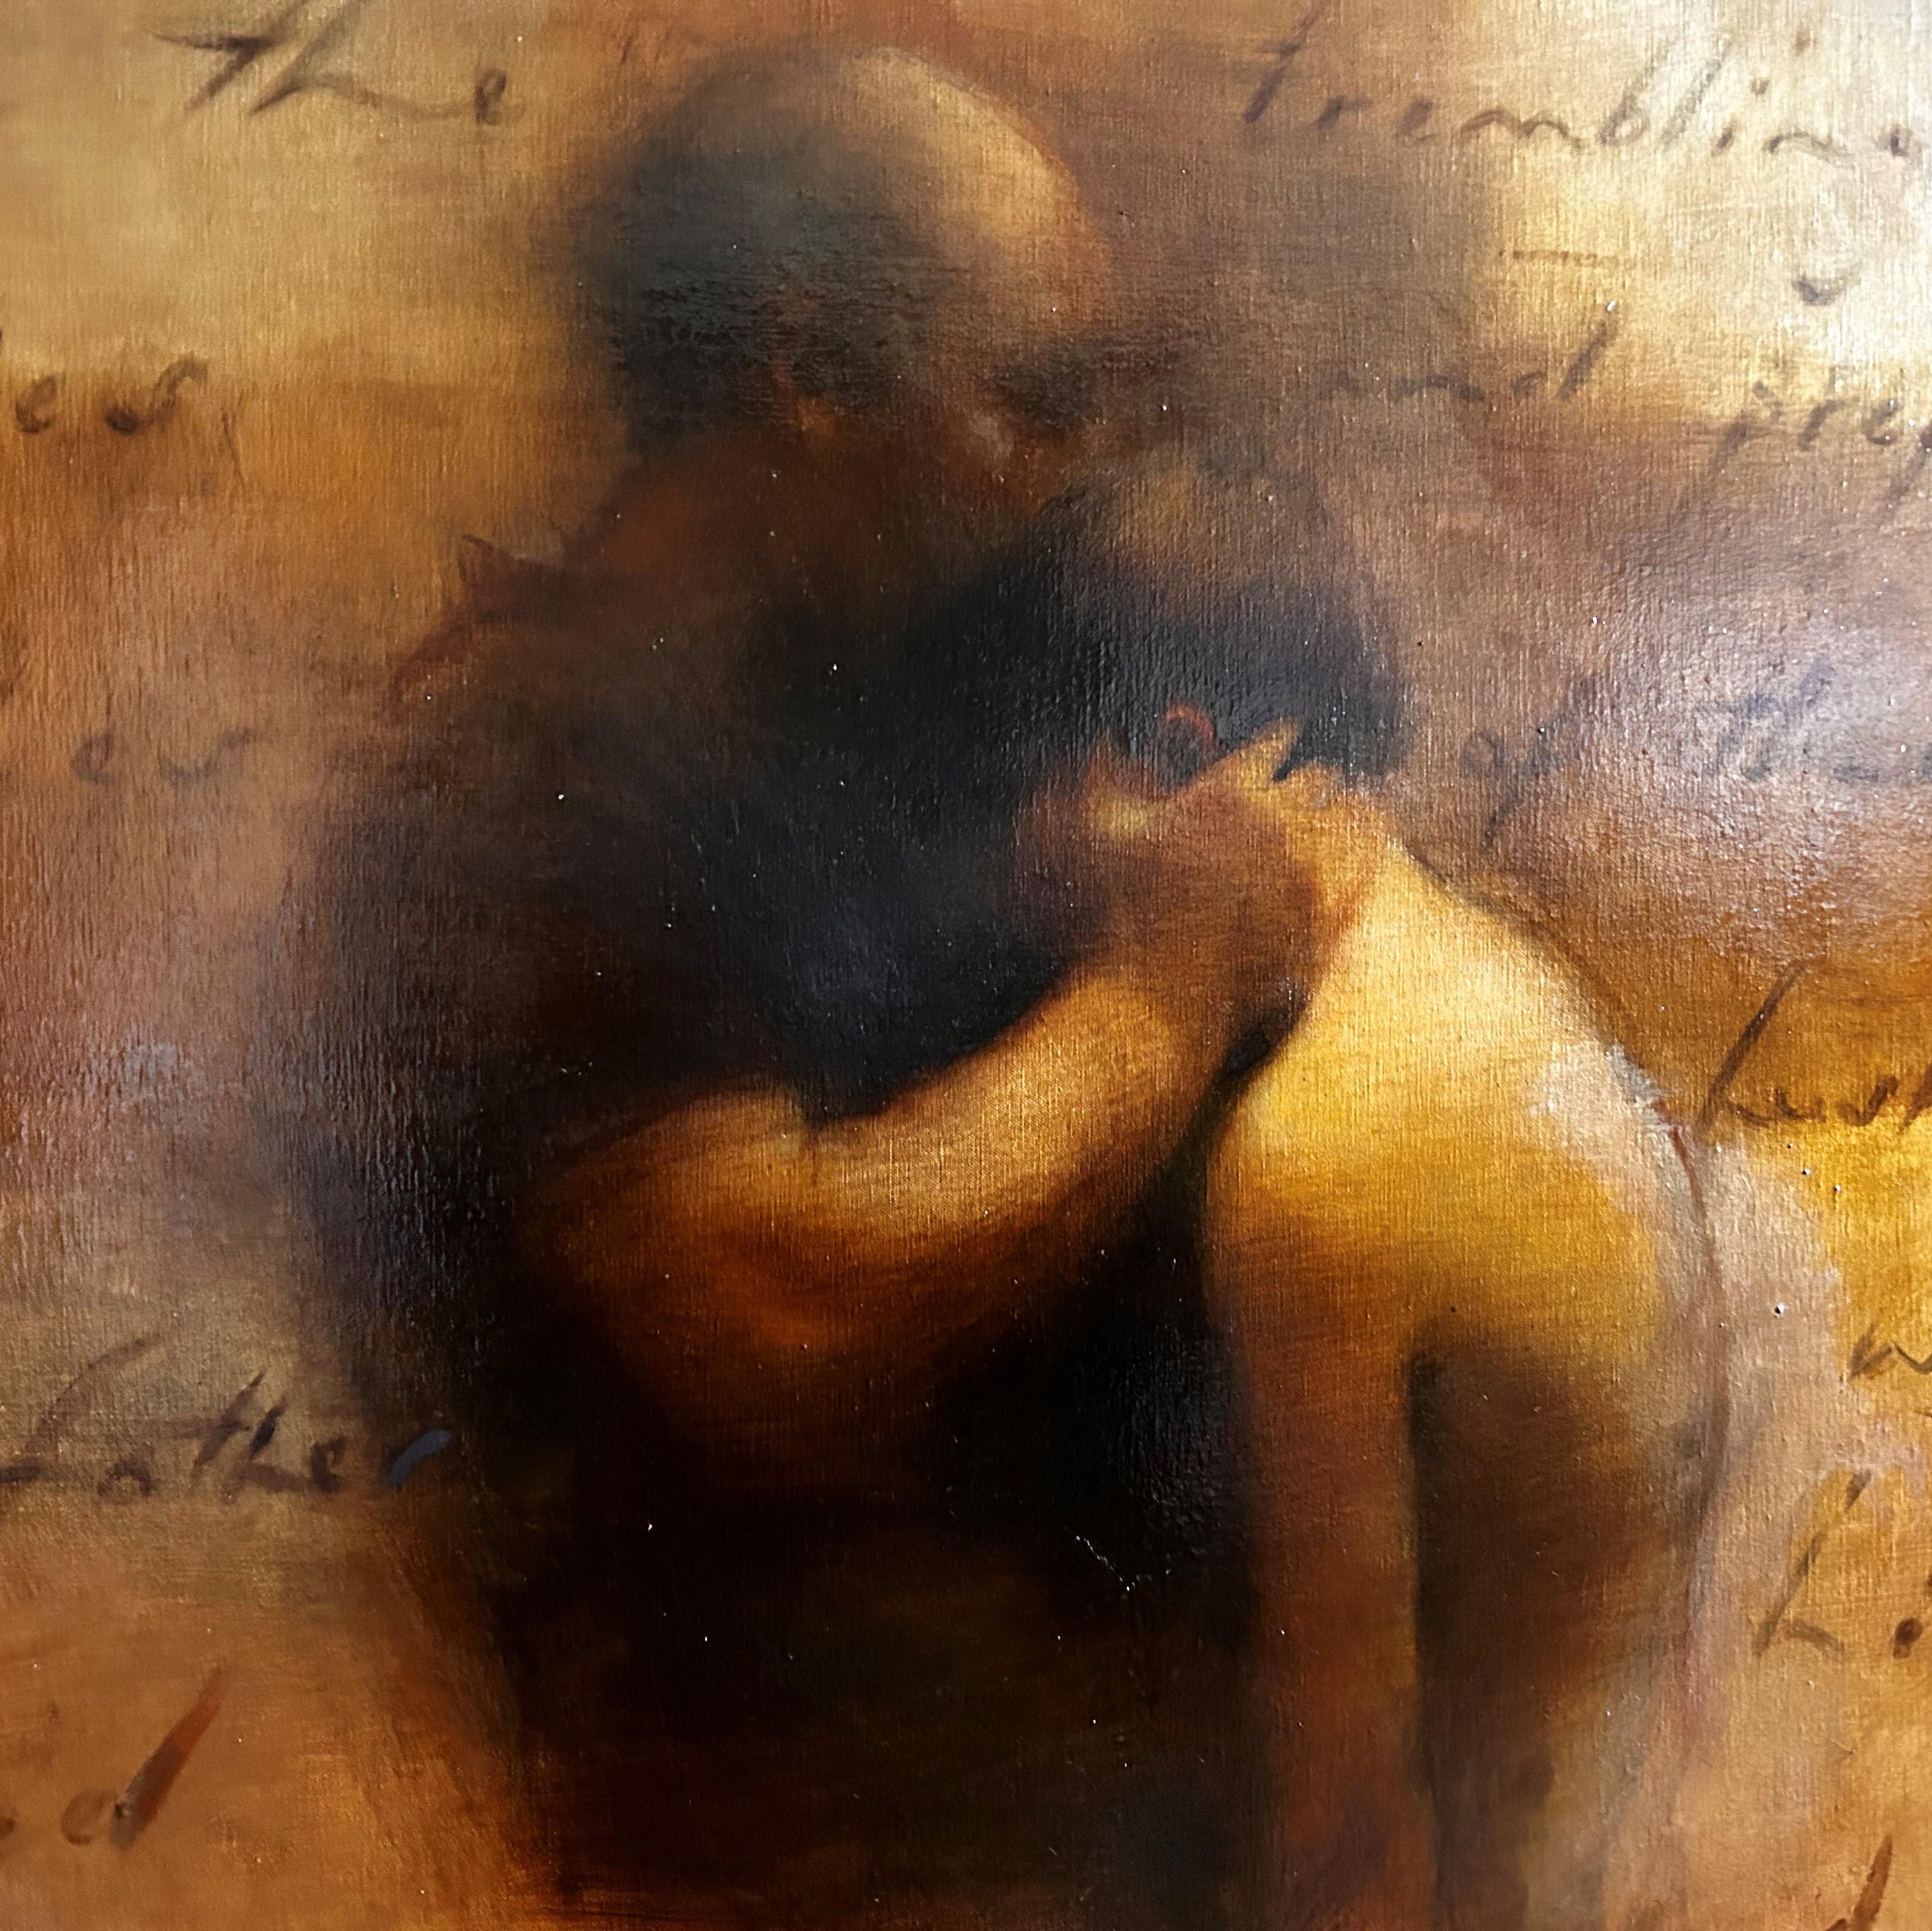 The Prodigal Son II - Oil, Parable, Father, Son, hug, embrace, forgiveness, love - Contemporary Art by Charlie Mackesy